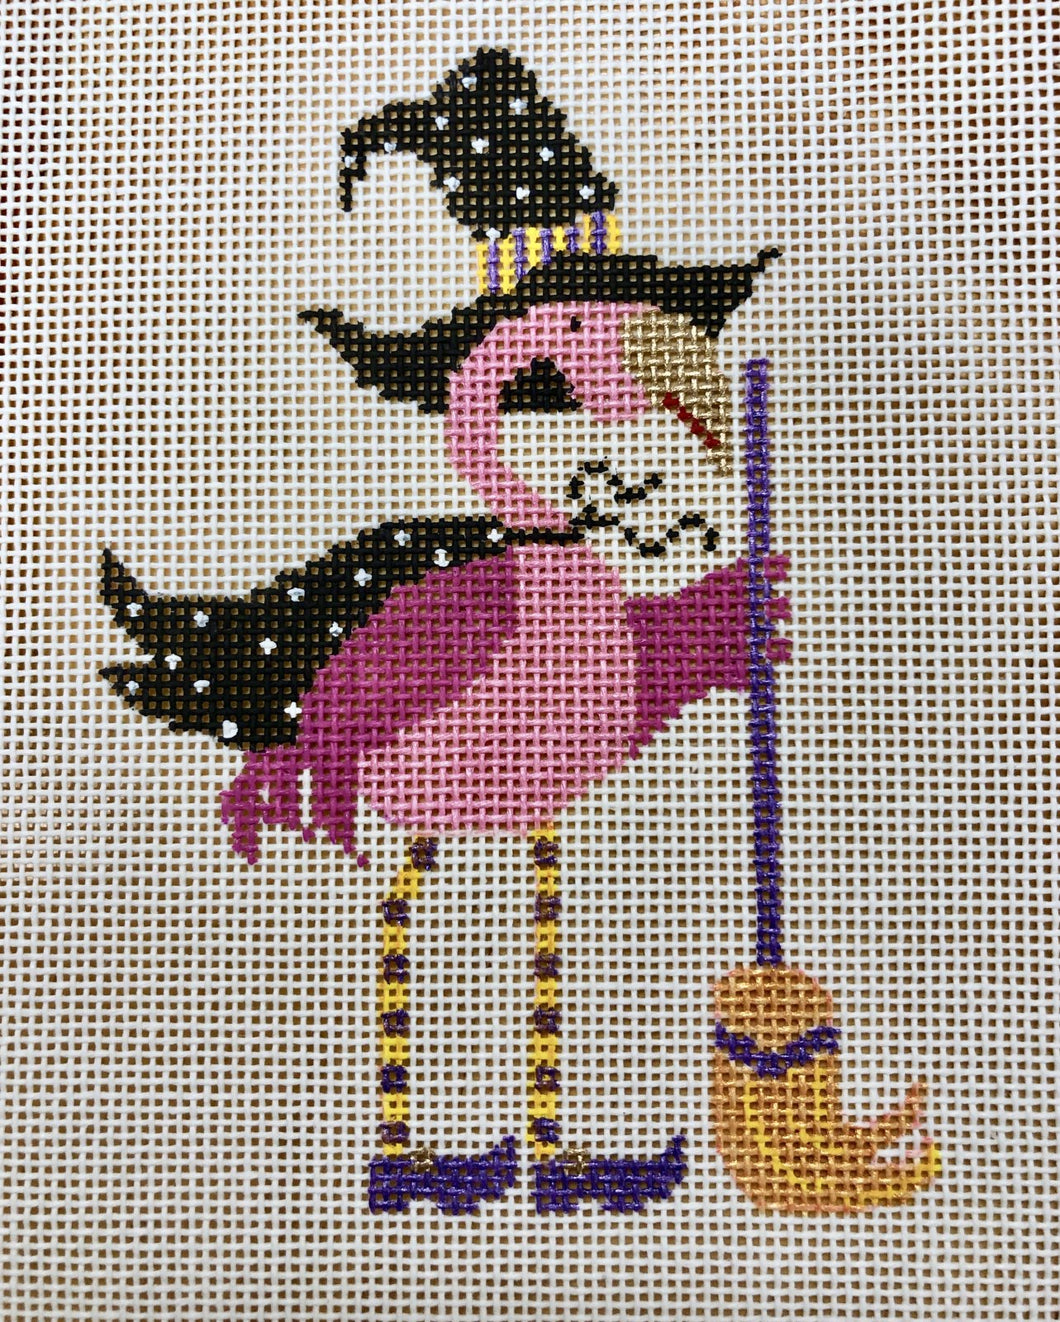 flamingo witch with stitch guide